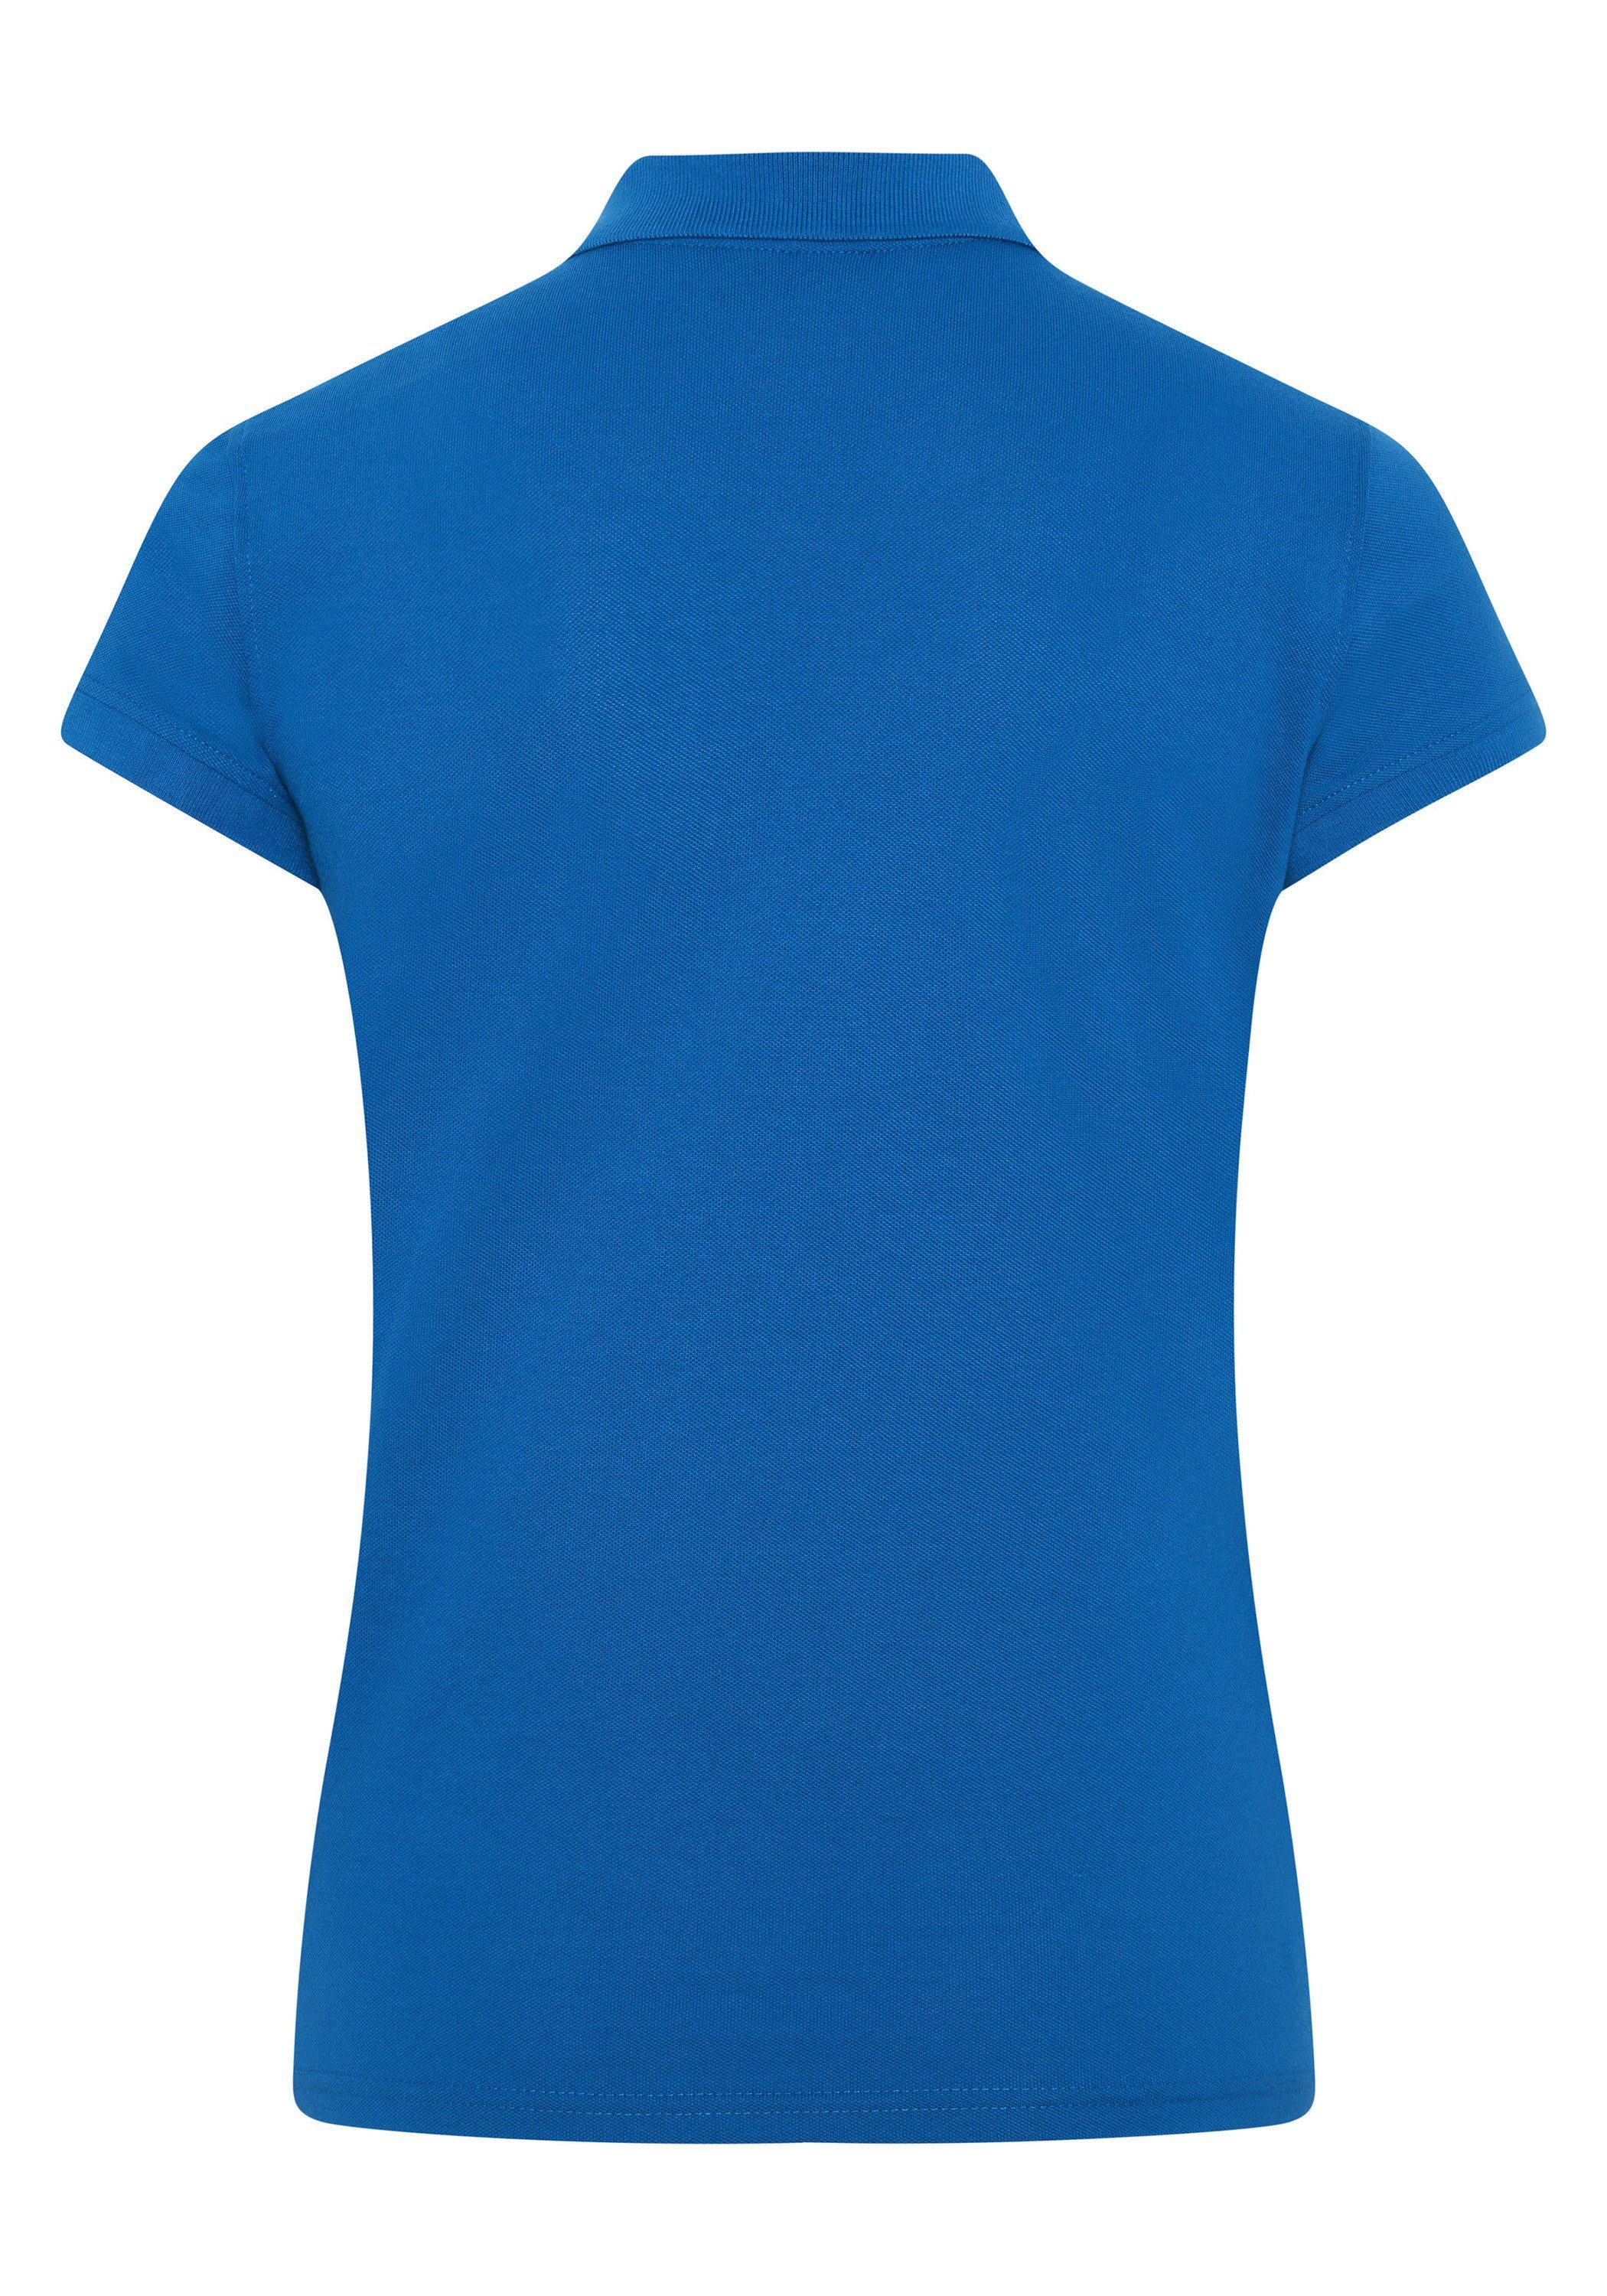 Expand Poloshirt aus royal blau Material strapazierfähigem